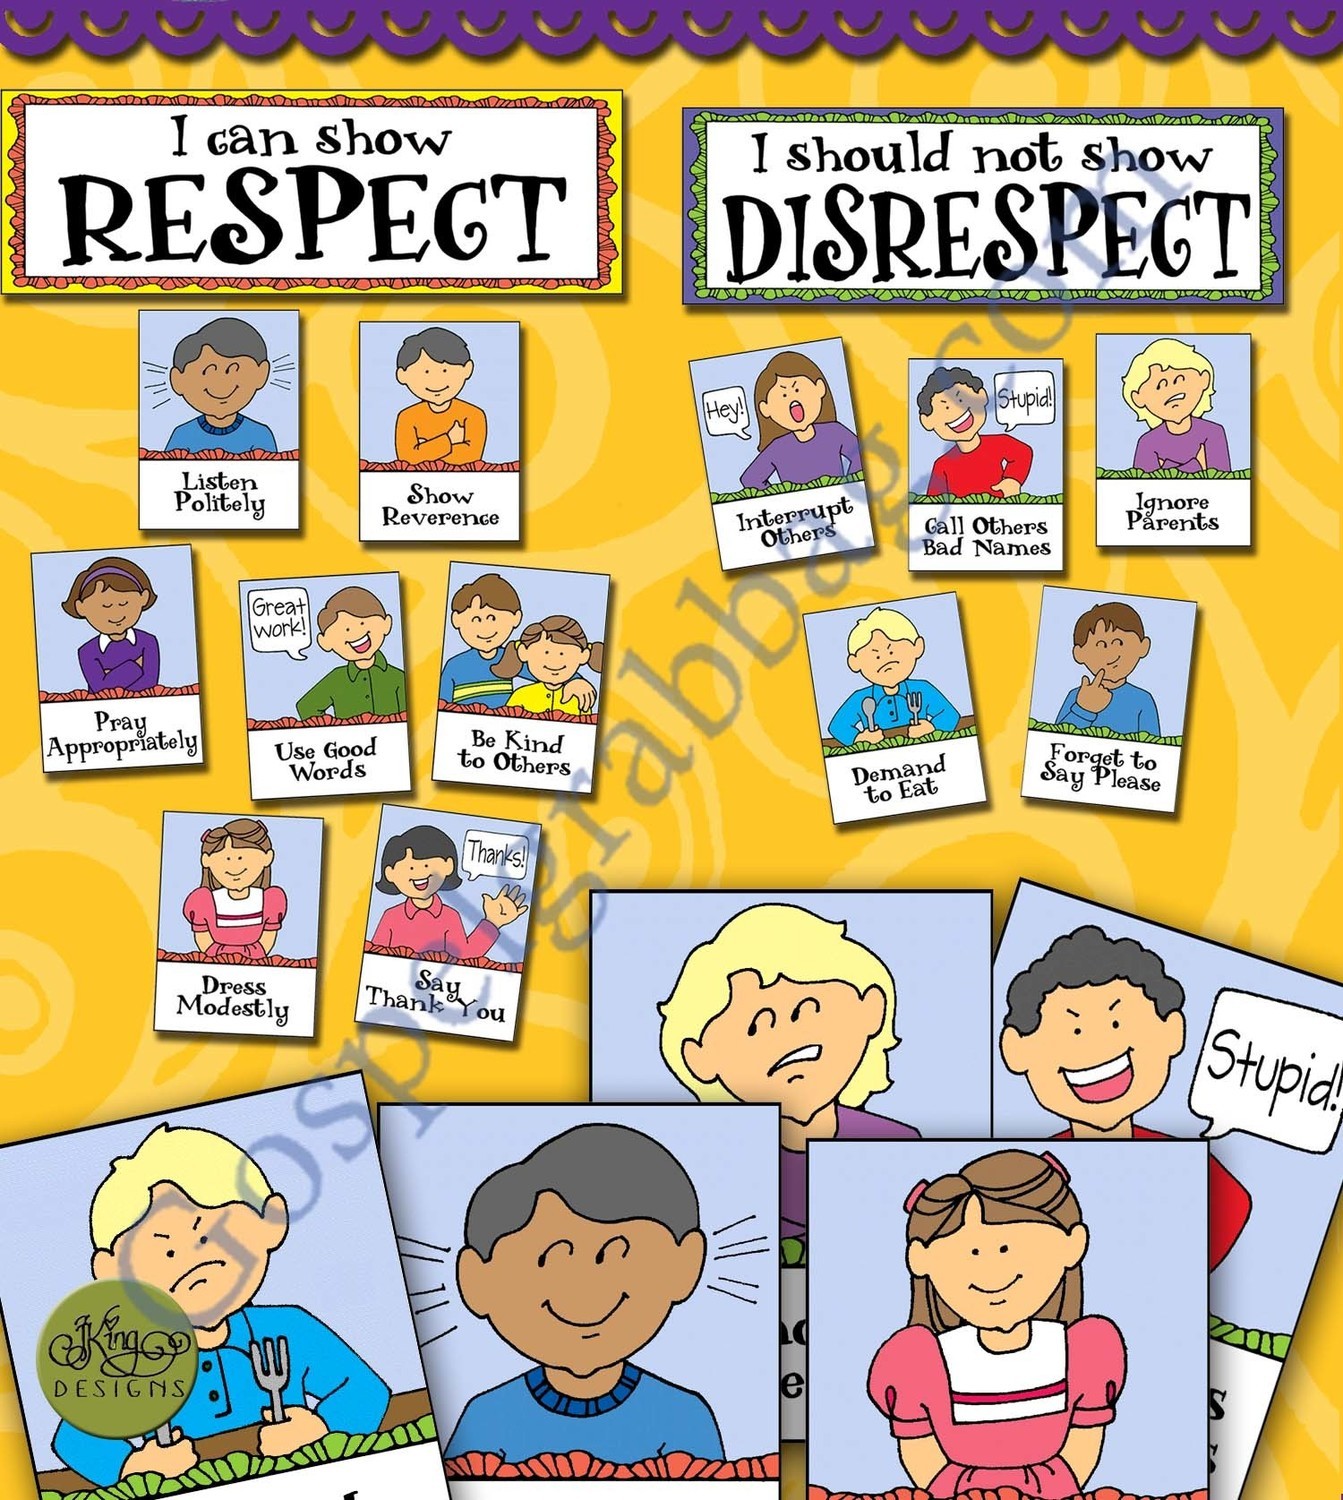 RESPECT FAVORITO #respectviral #respectcine #respectfavorito1